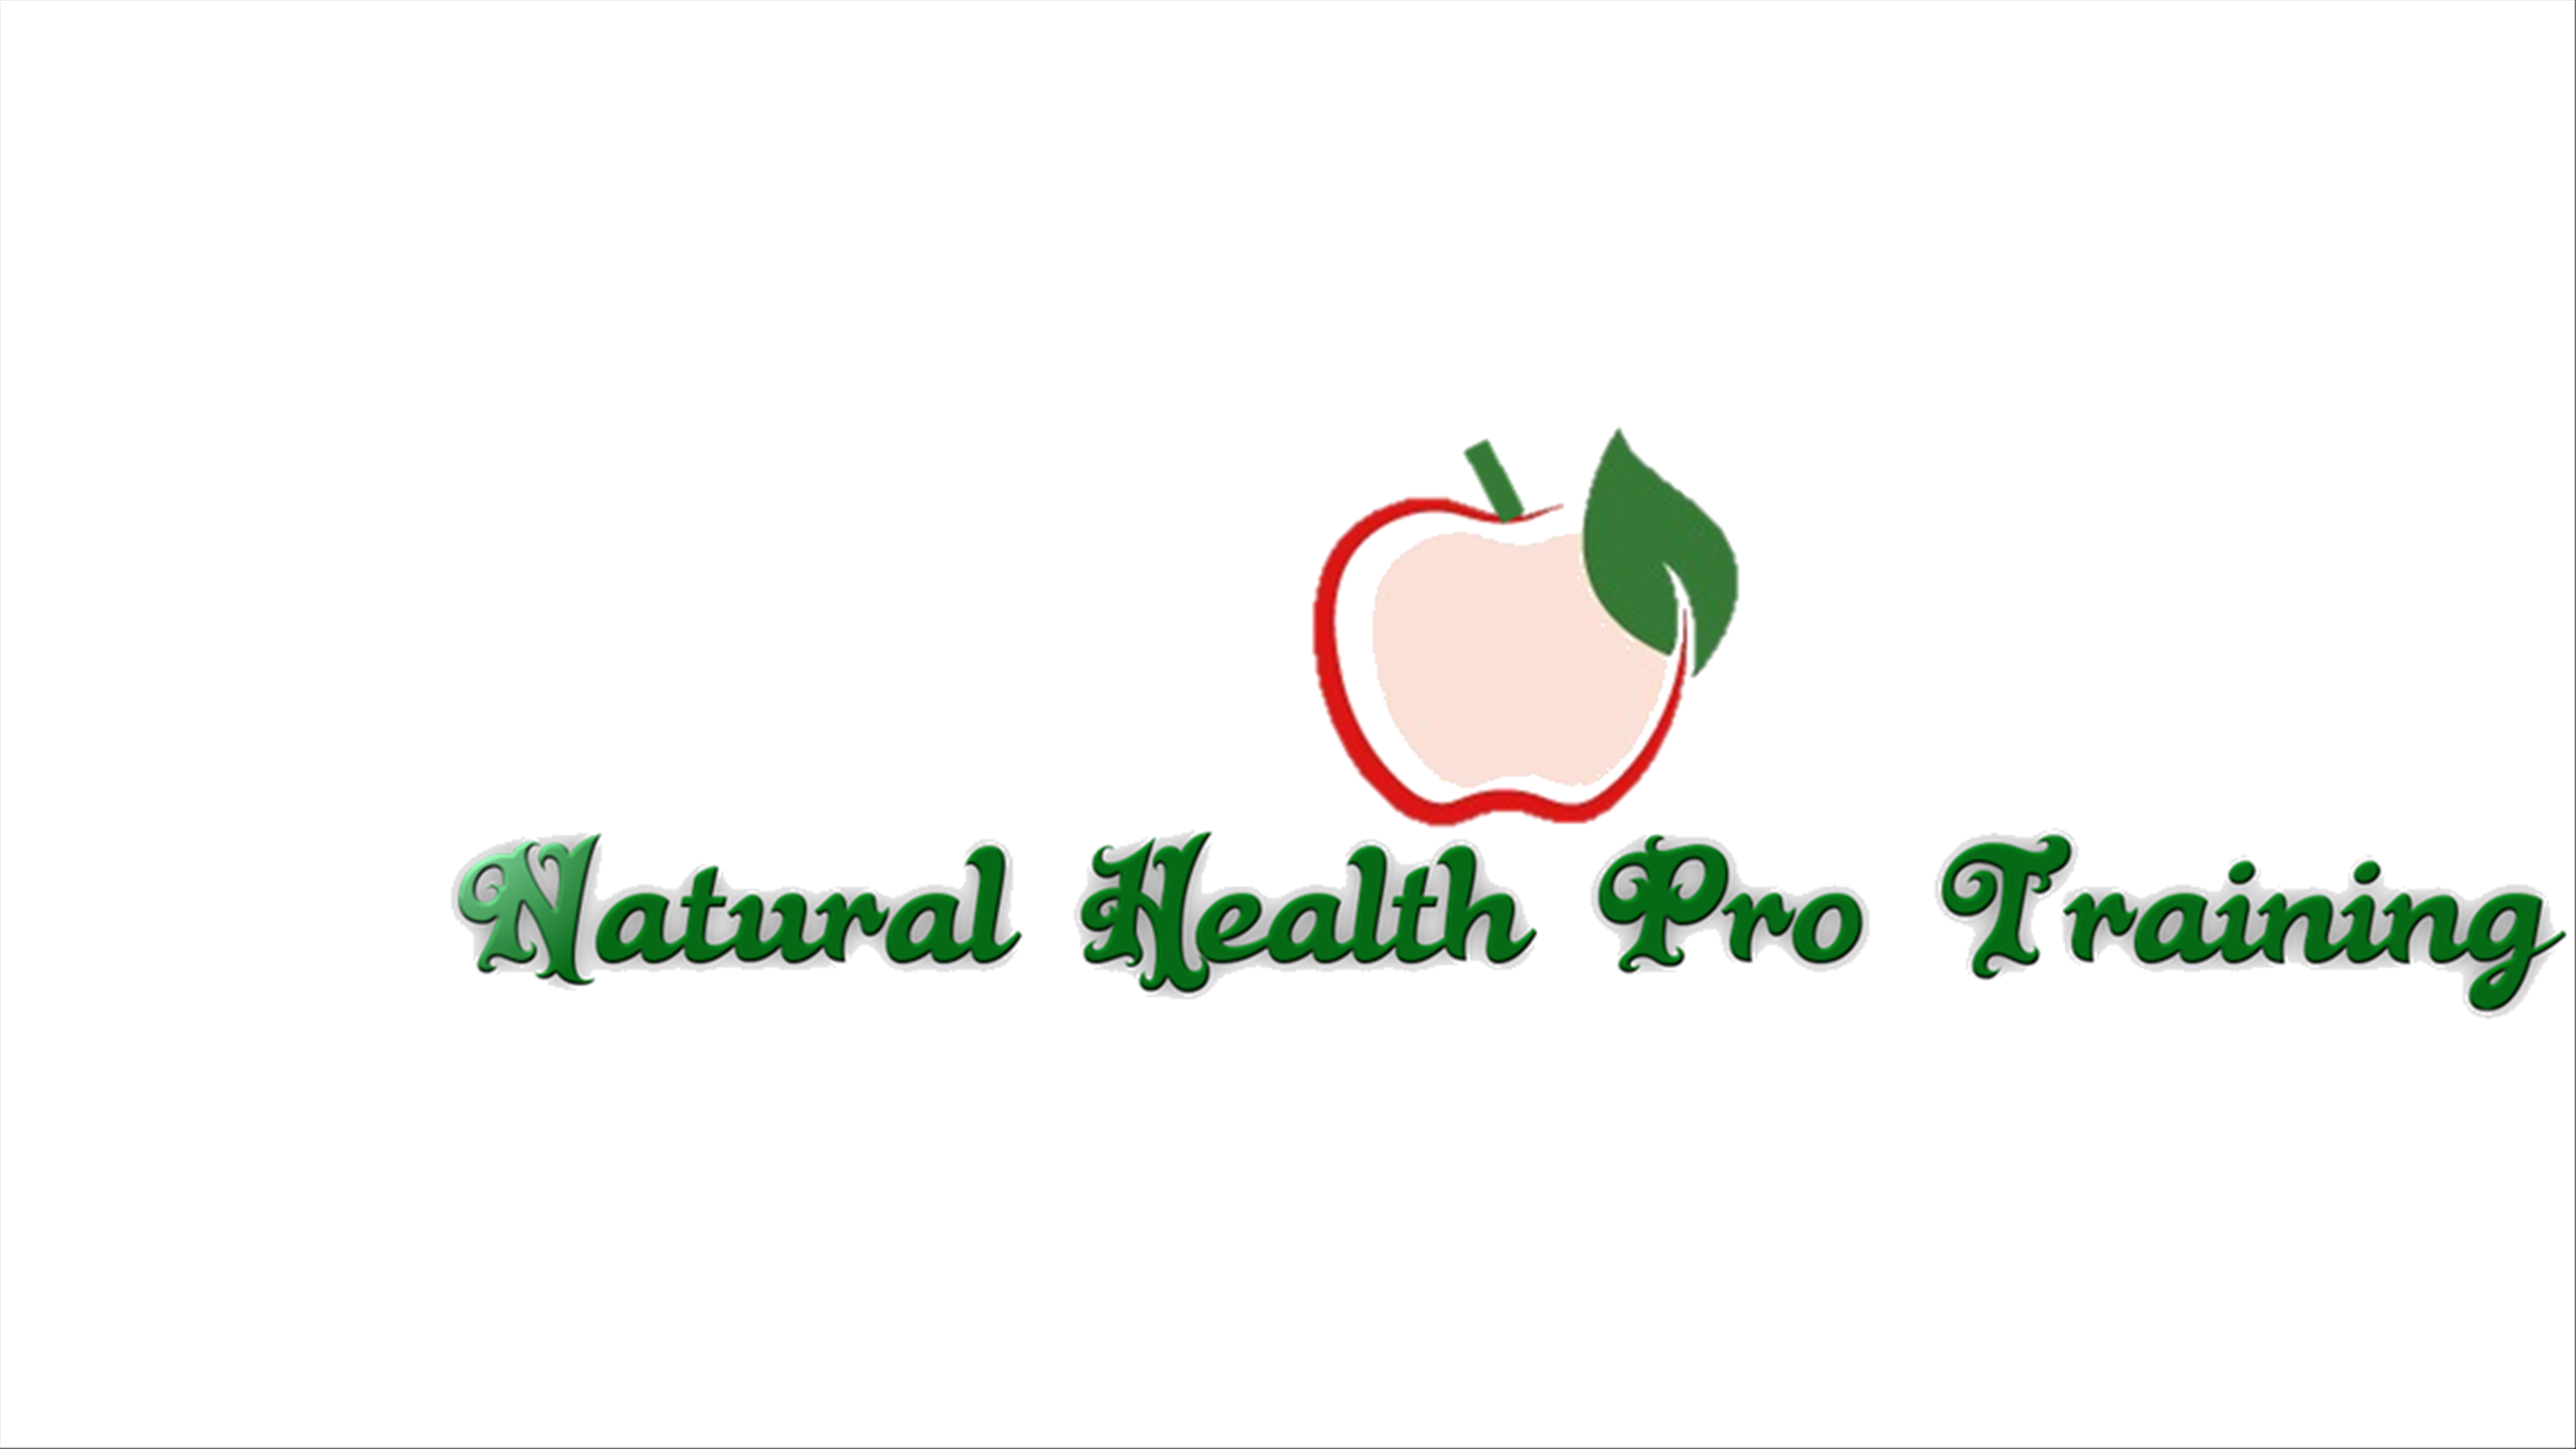 Natural Health Pro Training